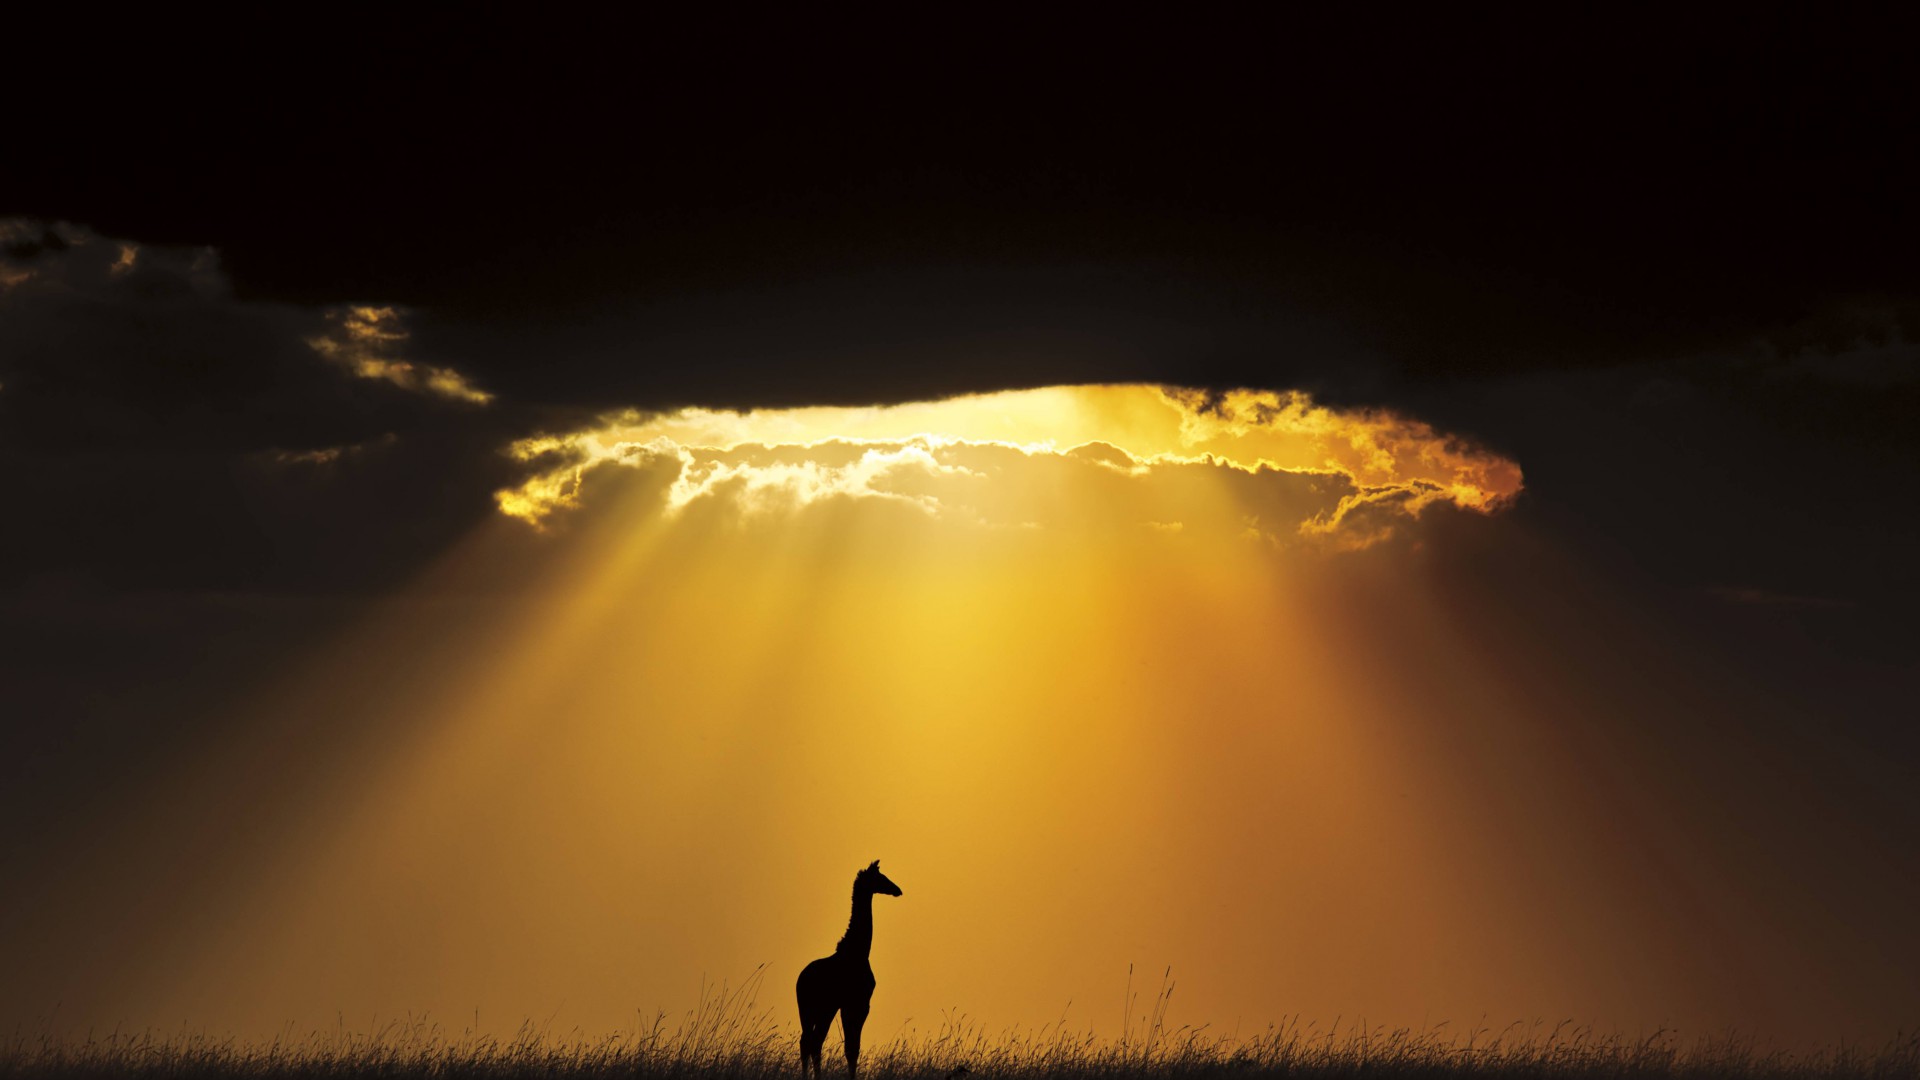 жираф, небо, пейзаж, облака, солнце, силуэт, giraffe, sky, landscape, clouds, sun, silhouette (horizontal)